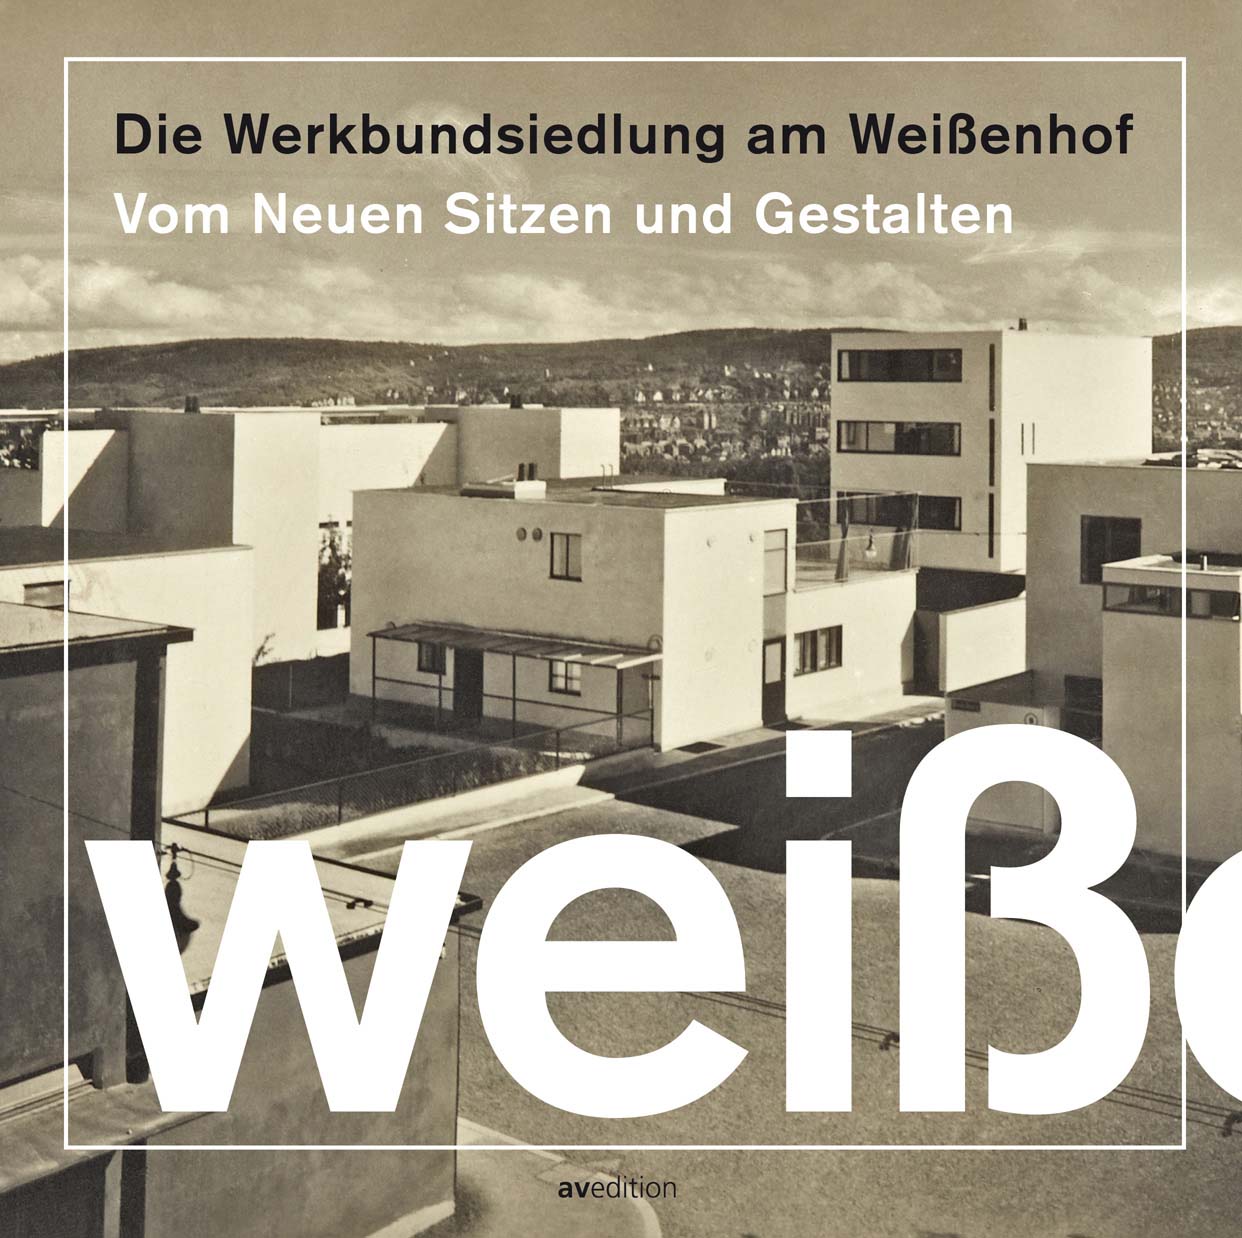 Imagen de Werkbund Settlement Weissenhof 2